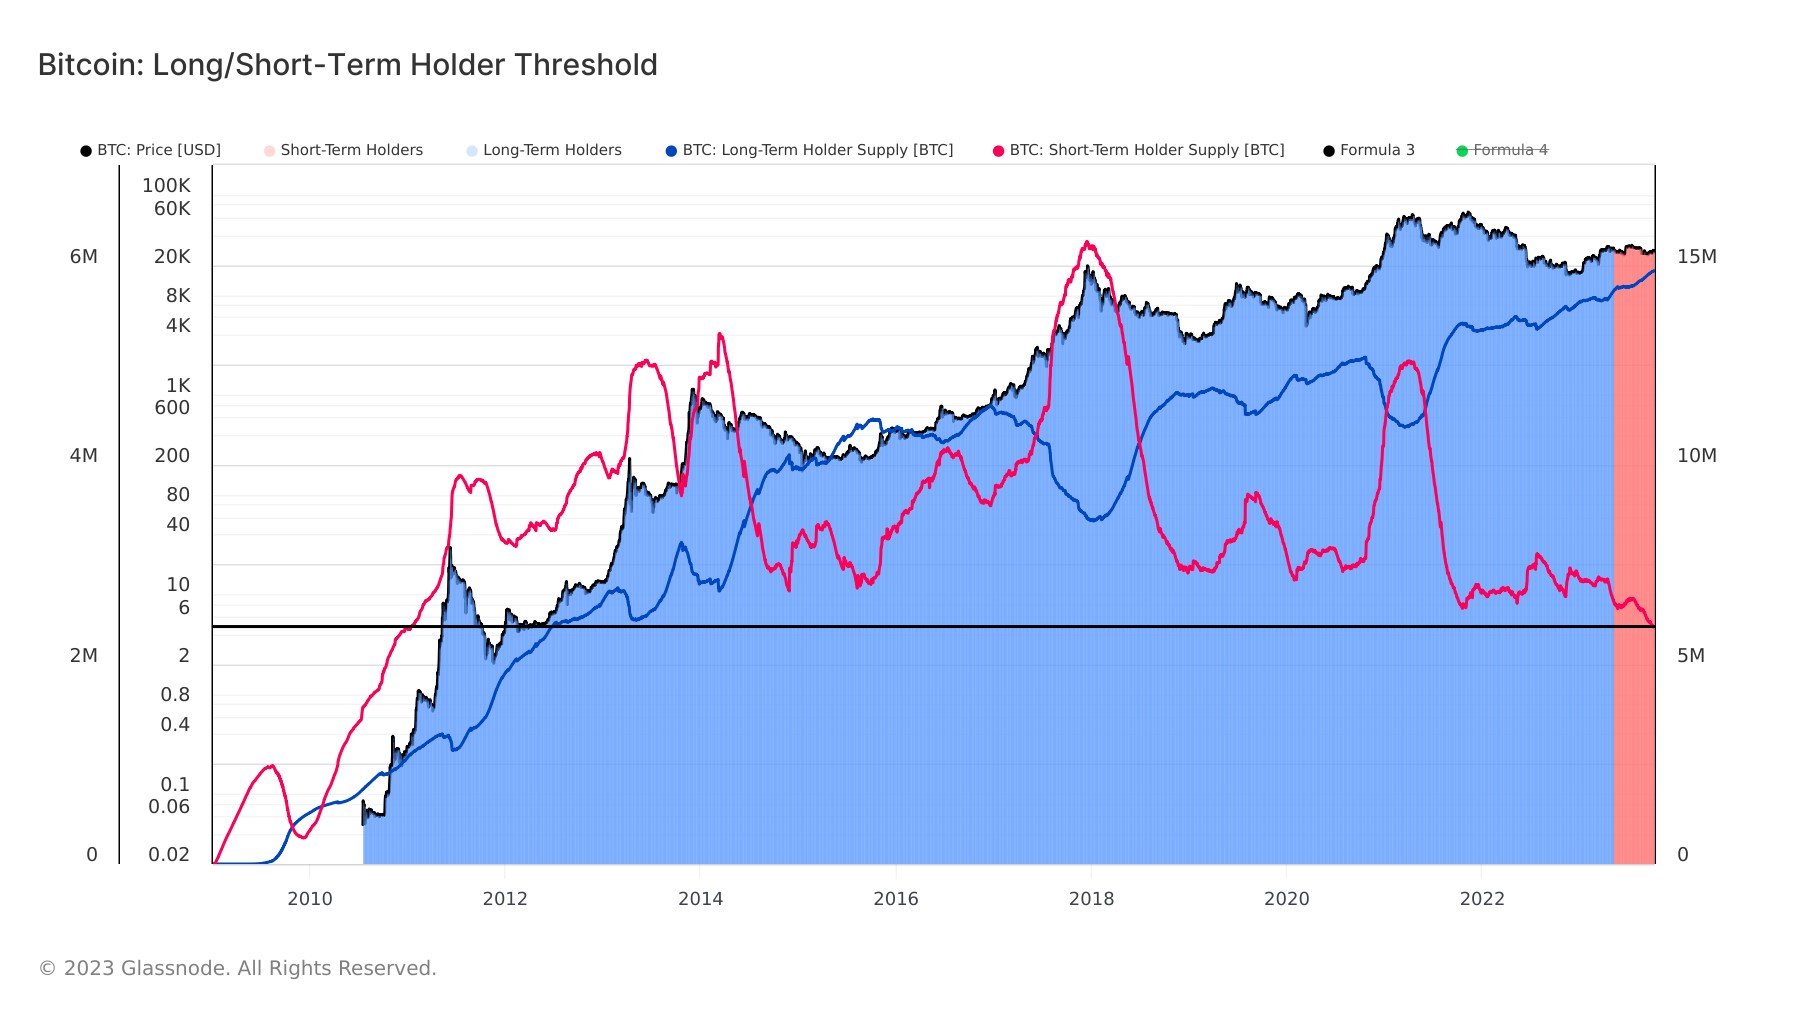 Long/Short term holder threshold: (Source: Glassnode)